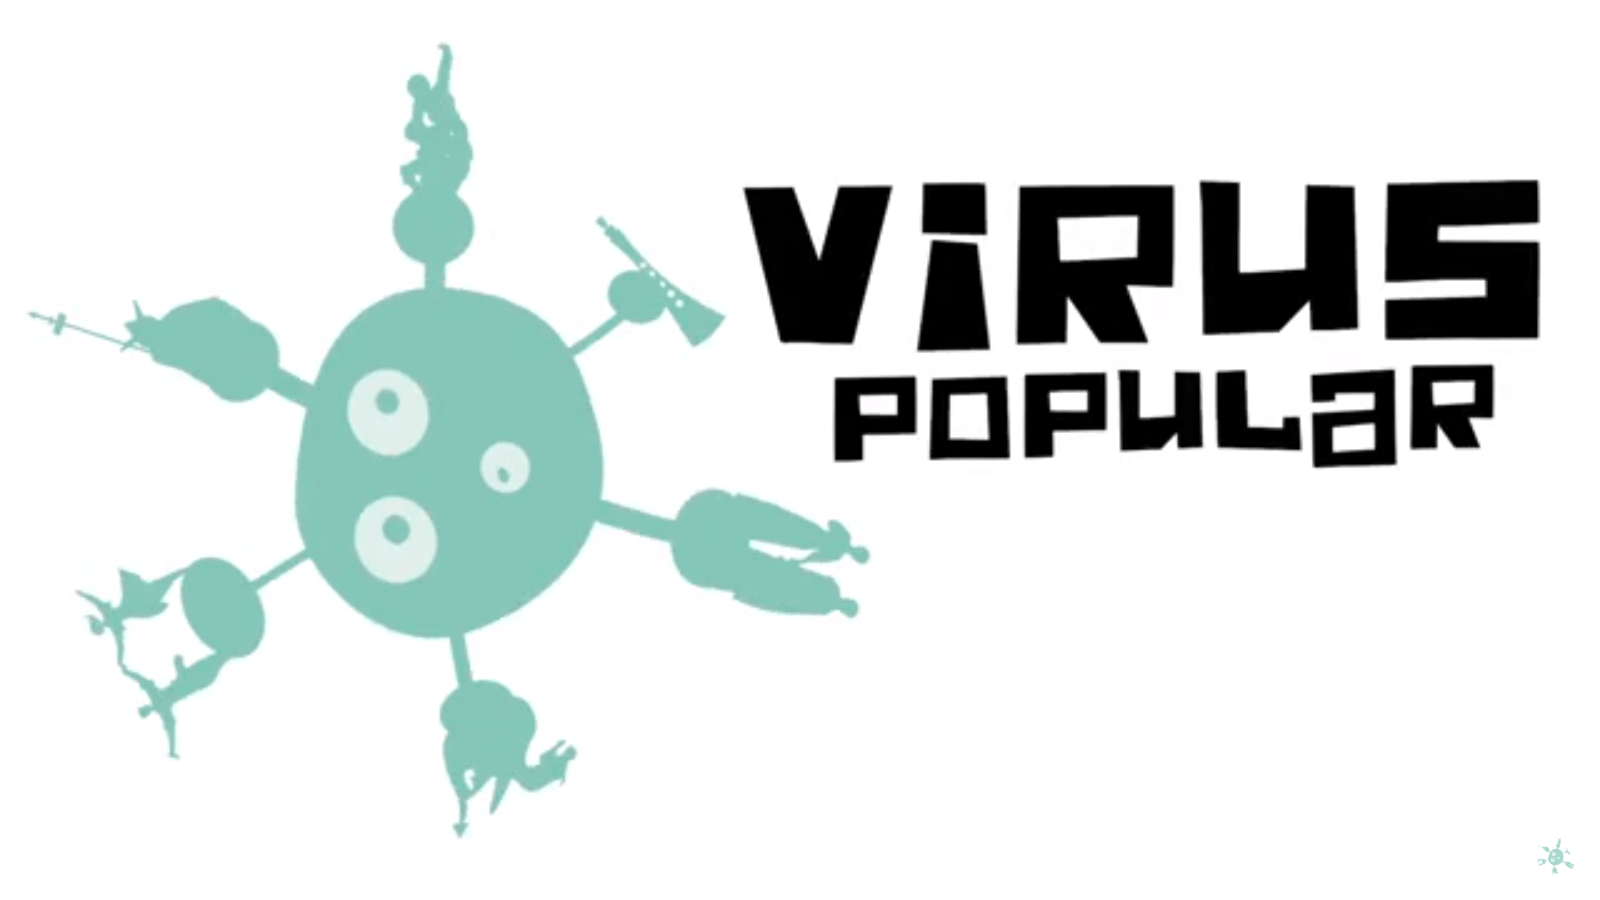 Virus Popular